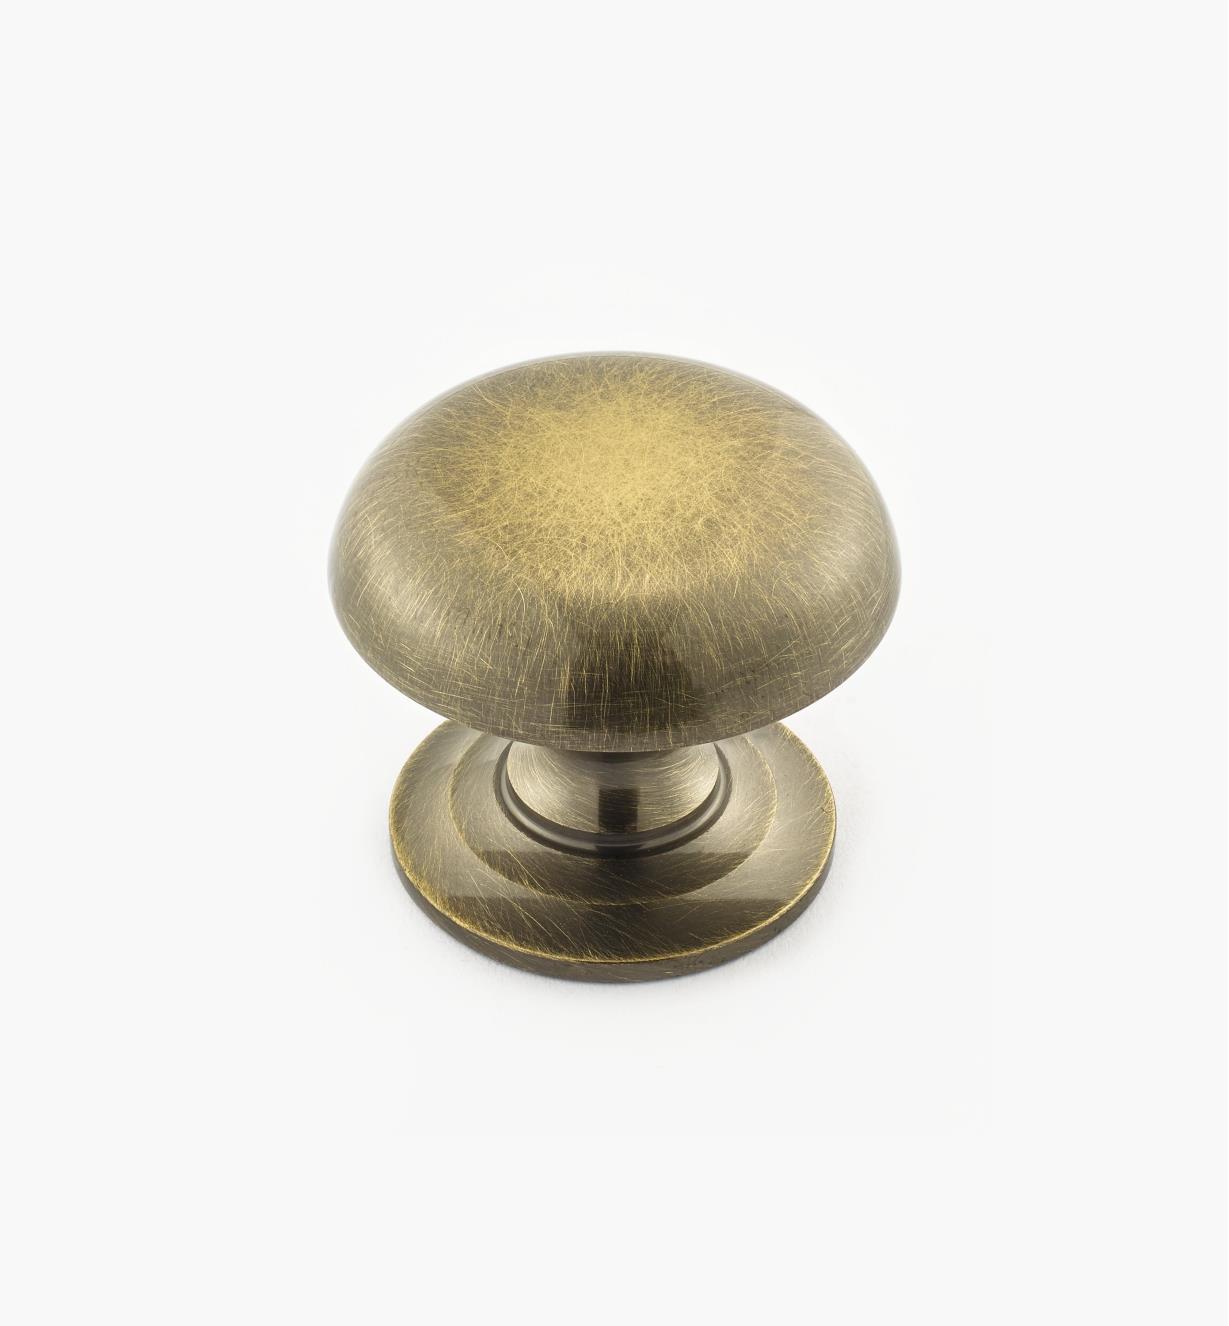 02W3228 - Antique Brass Suite - 1 1/4" x 1 1/16" Turned Brass Dome Knob